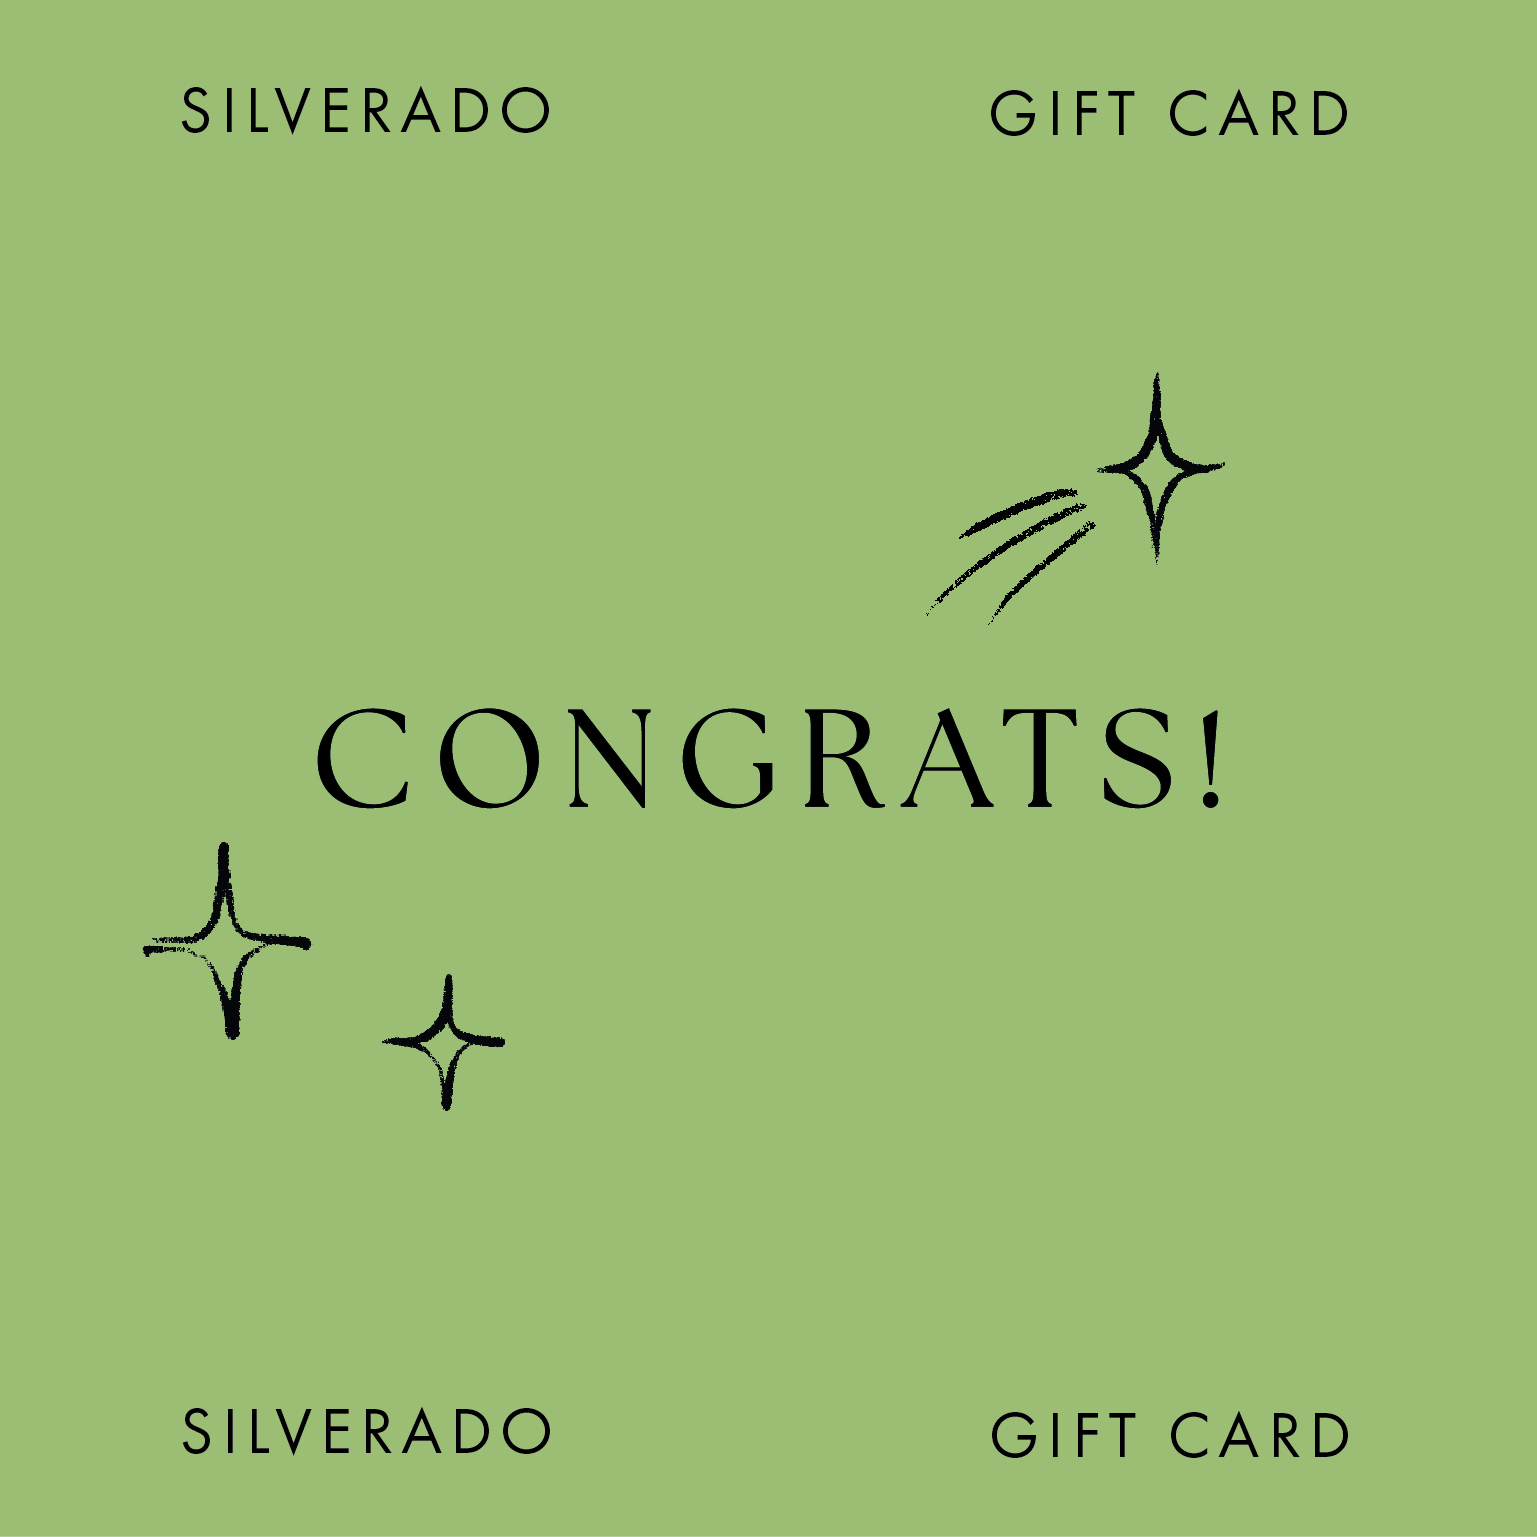 Congrats Gift Card - Silverado Jewellery